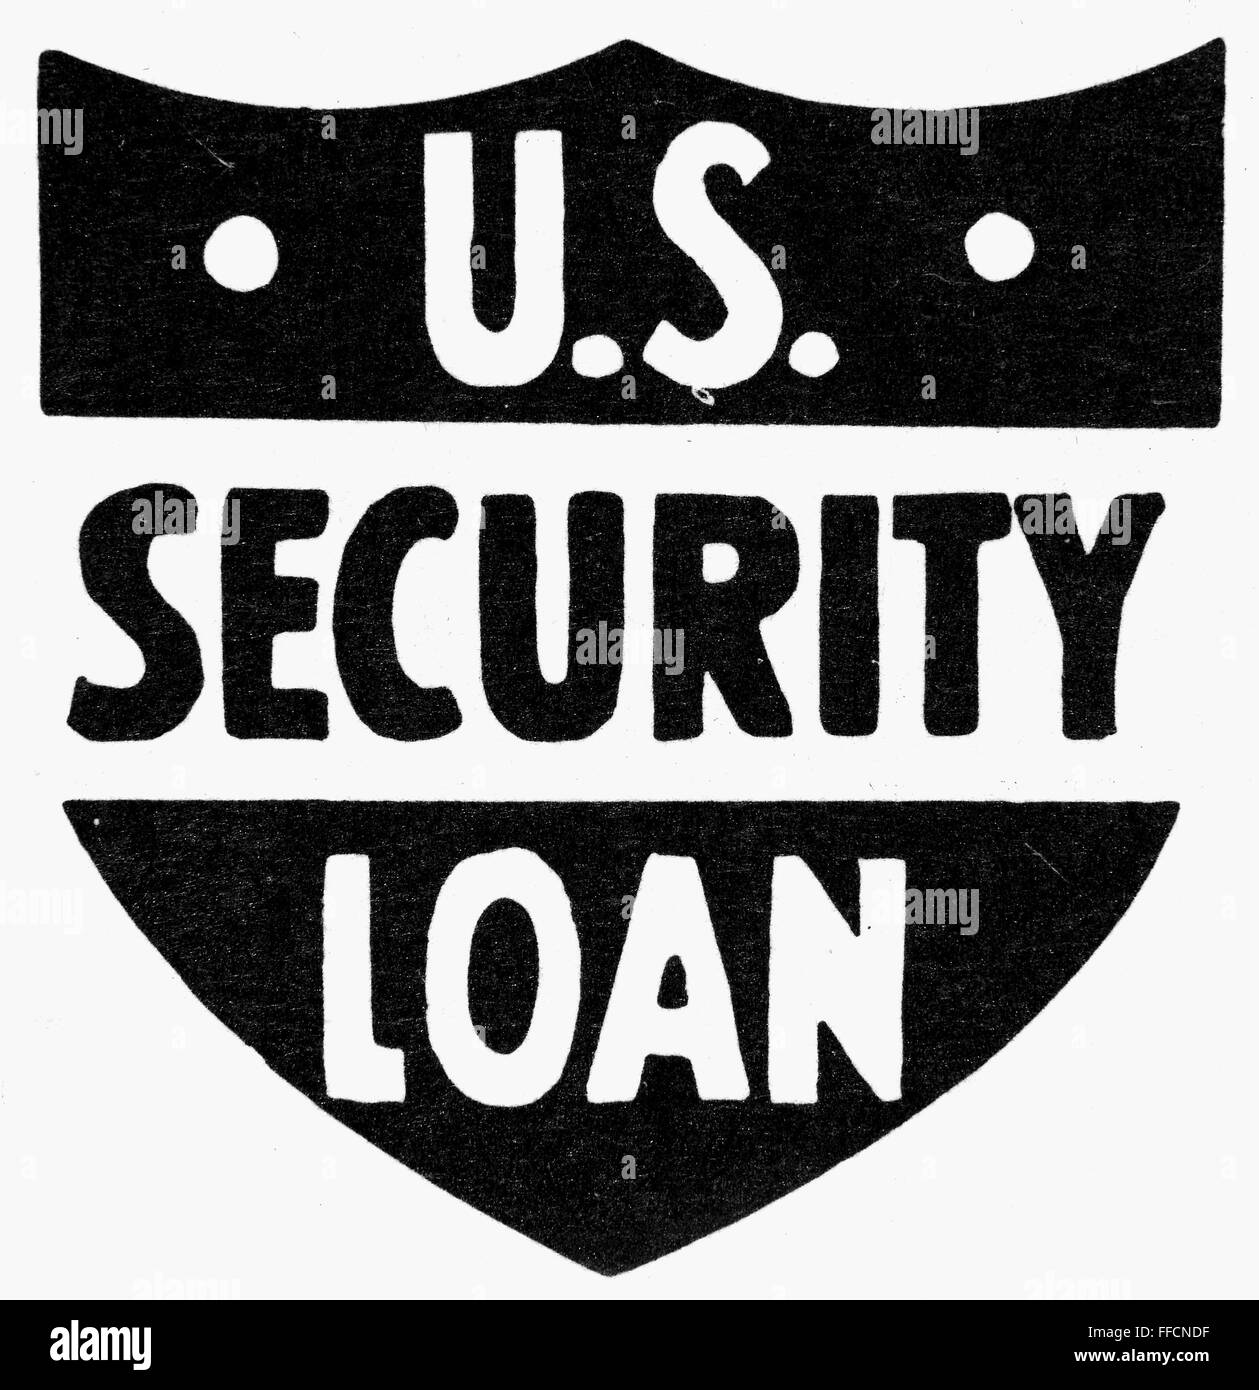 U.S. SECURITY LOAN. /nLogo for a U.S. Security Loan, 1950s. Stock Photo